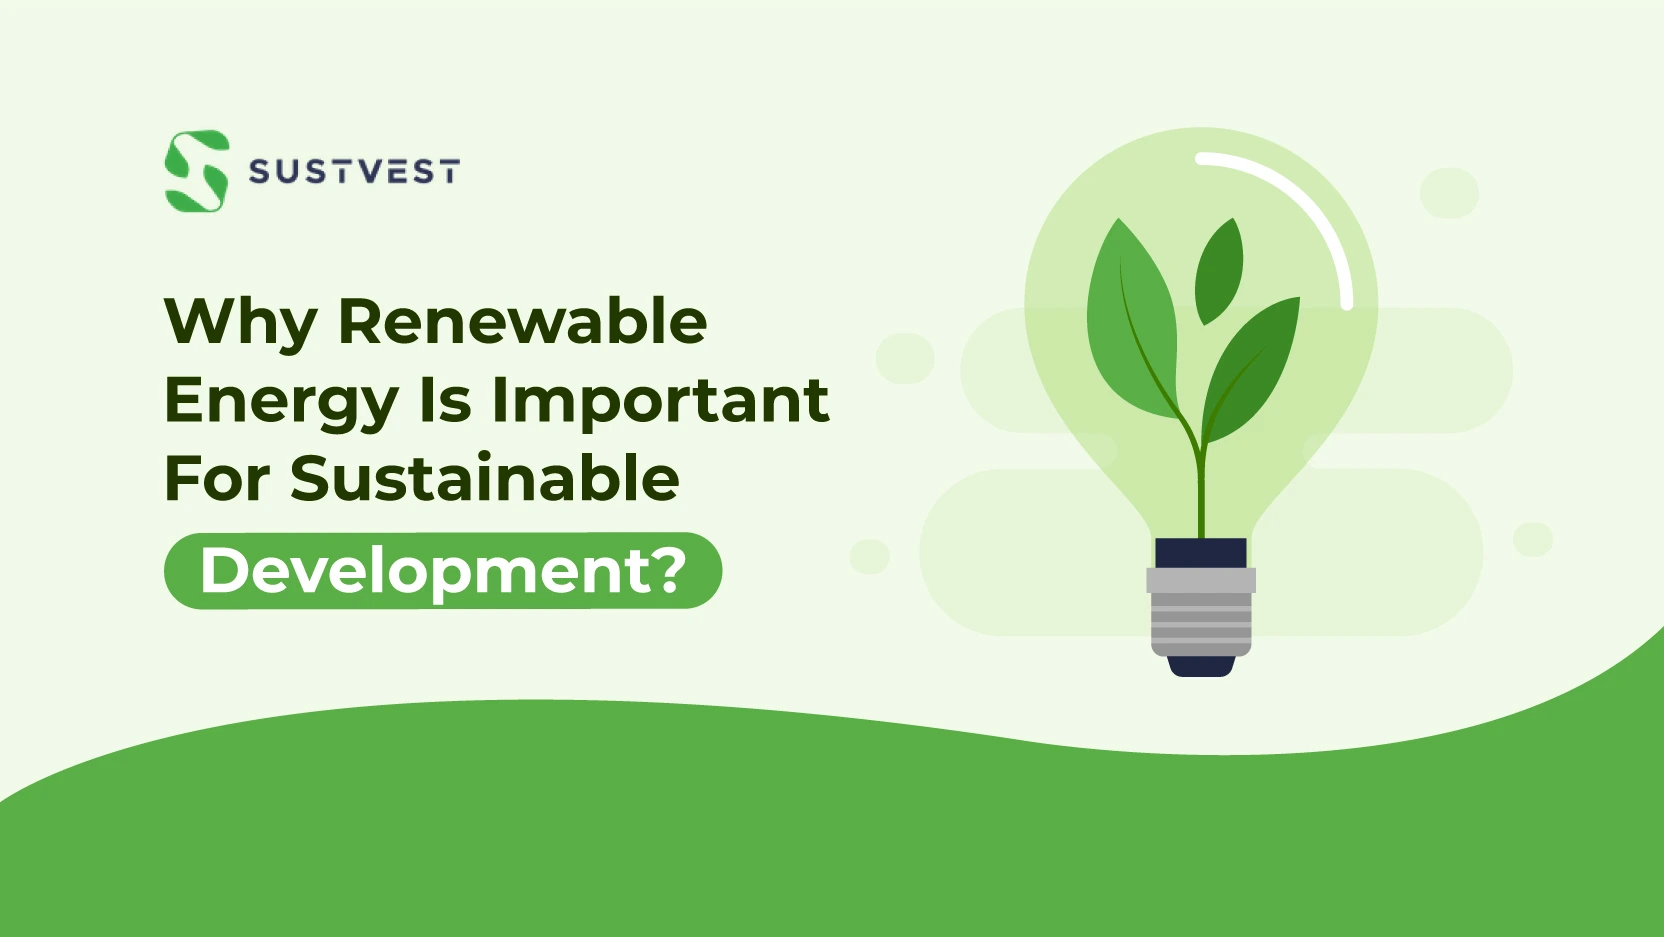 Renewable energy for sustainable development